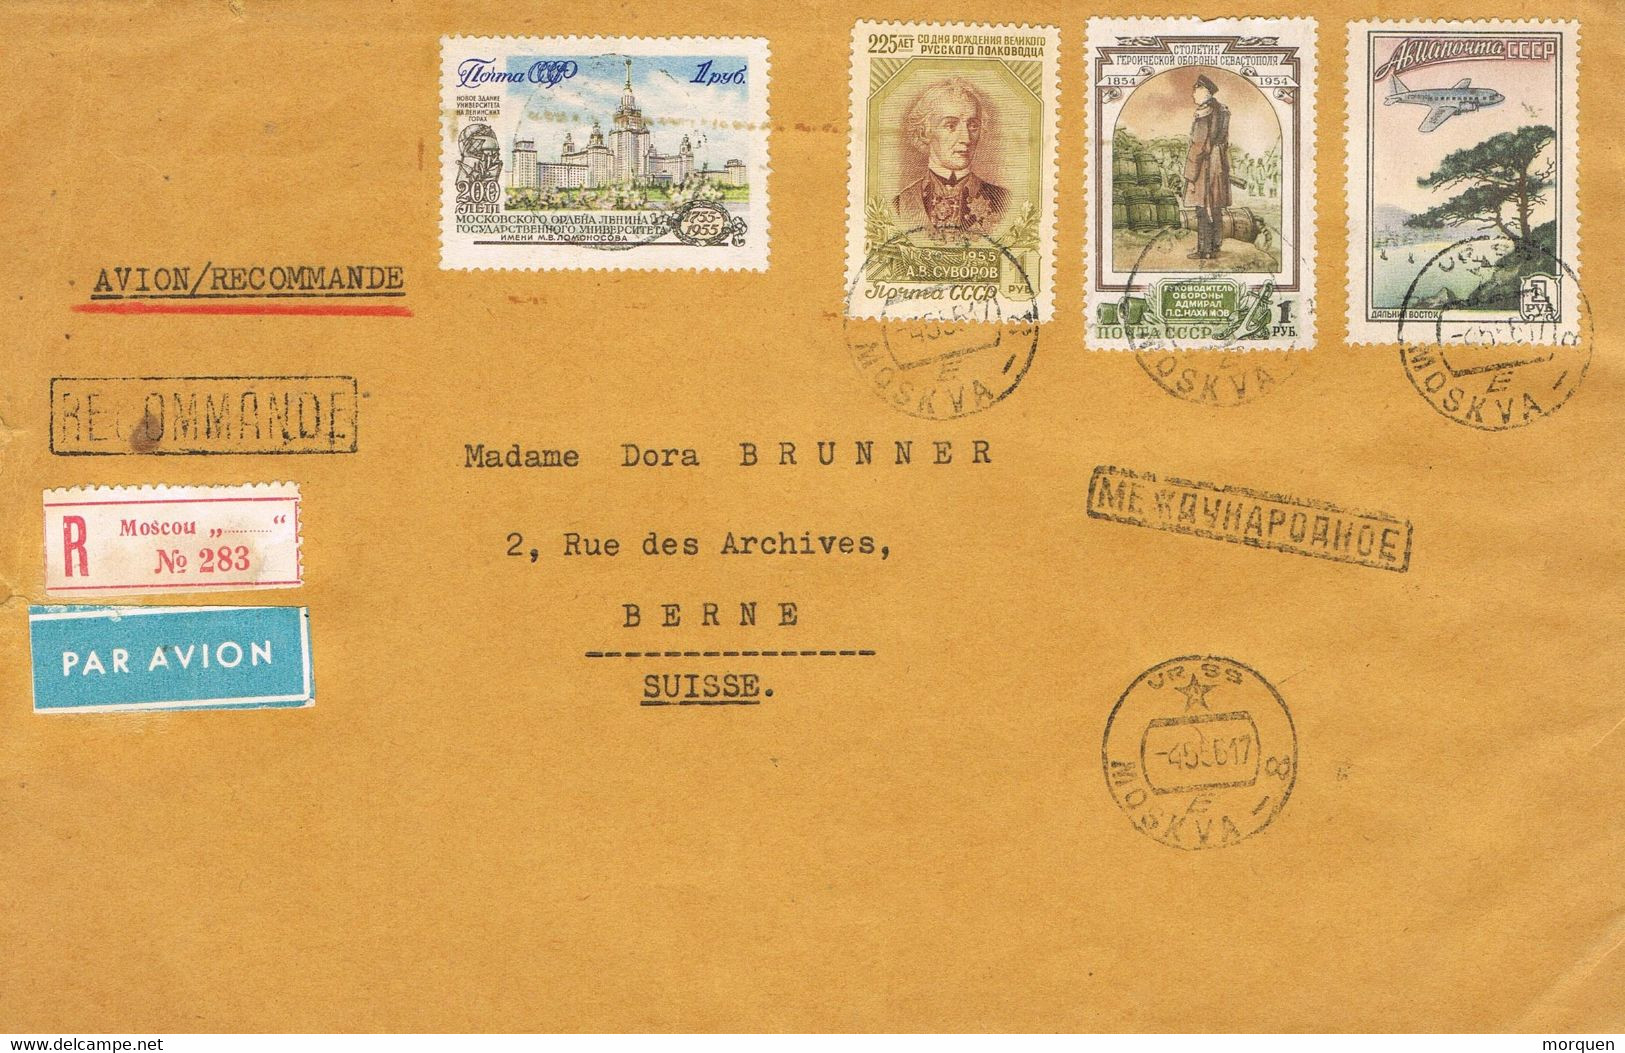 48750. Carta Aerea Certificada MOSCU (rusia) 1956 To Suisse - Covers & Documents